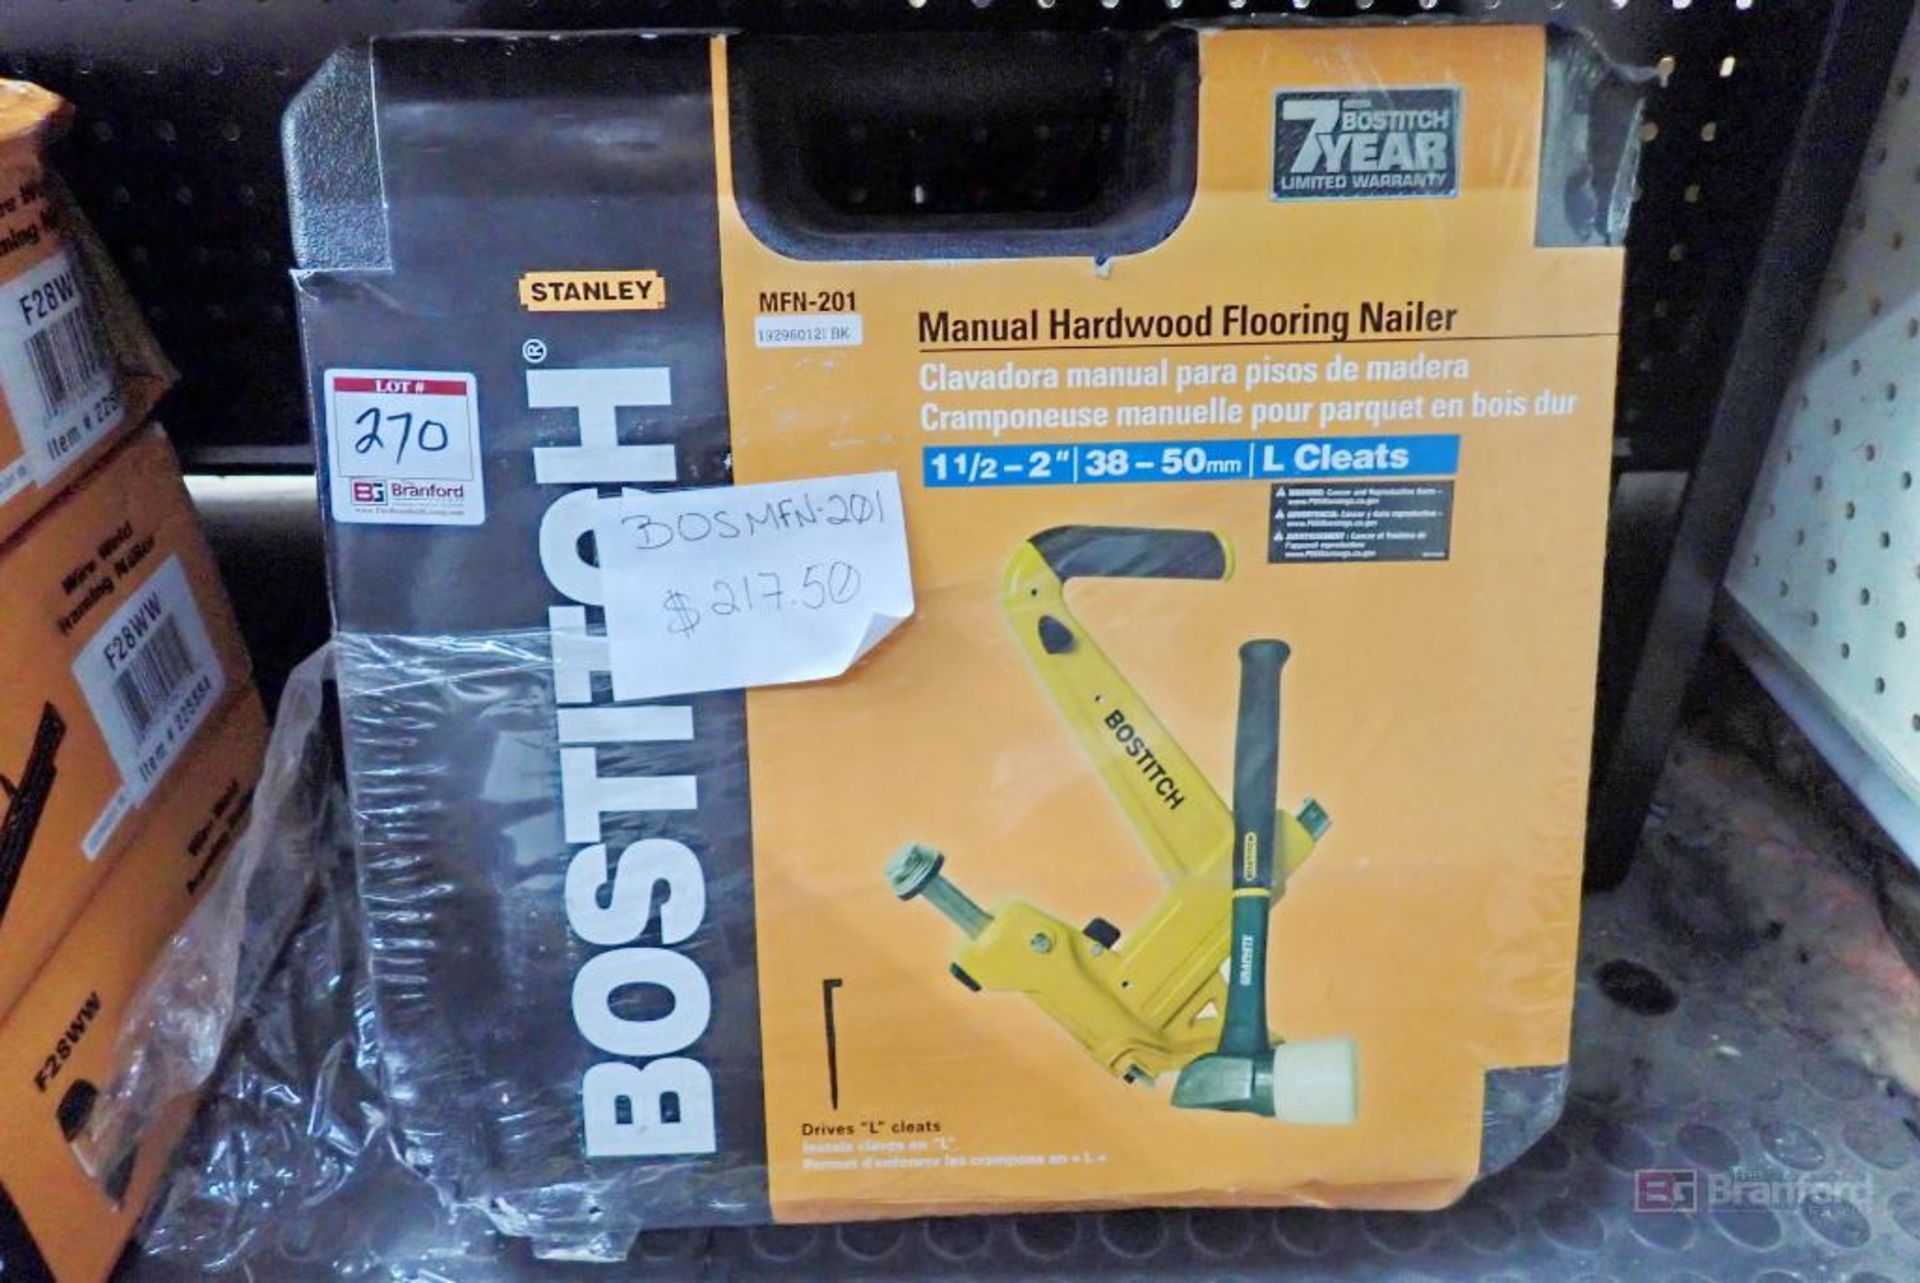 Bostitch MFN-201 Manual Hardwood Flooring Nailer